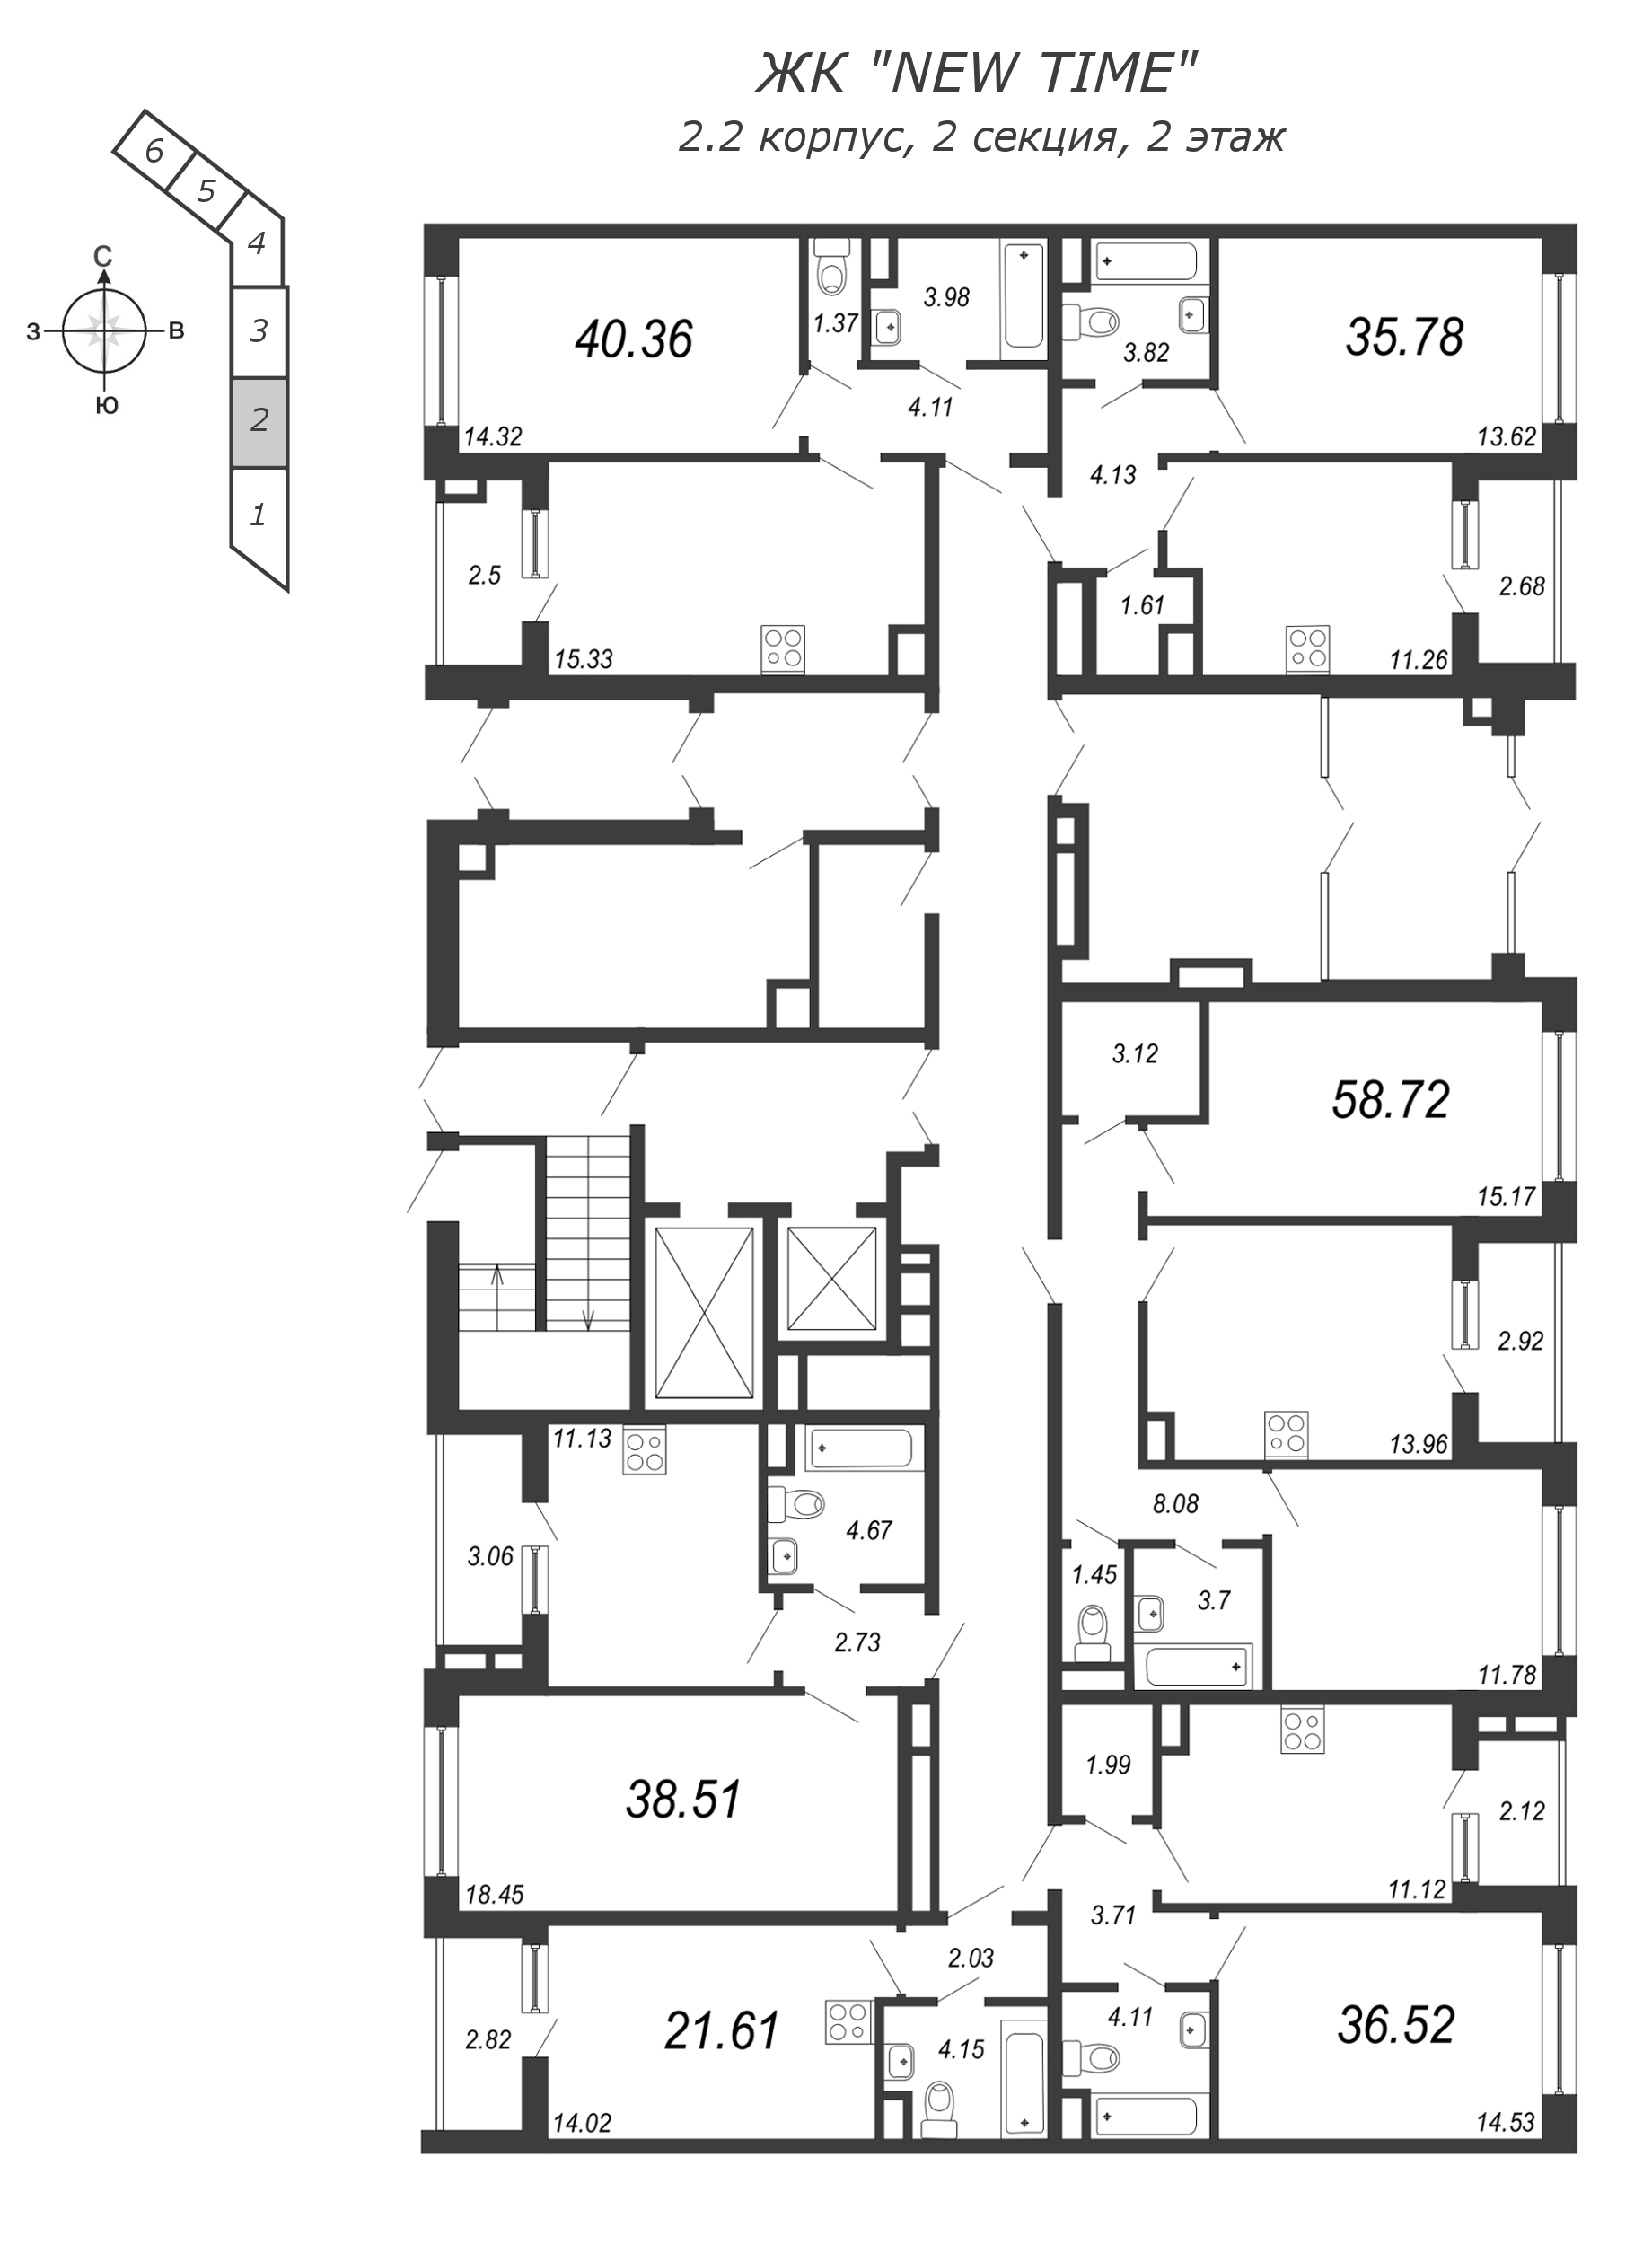 1-комнатная квартира, 36.6 м² в ЖК "NEW TIME" - планировка этажа